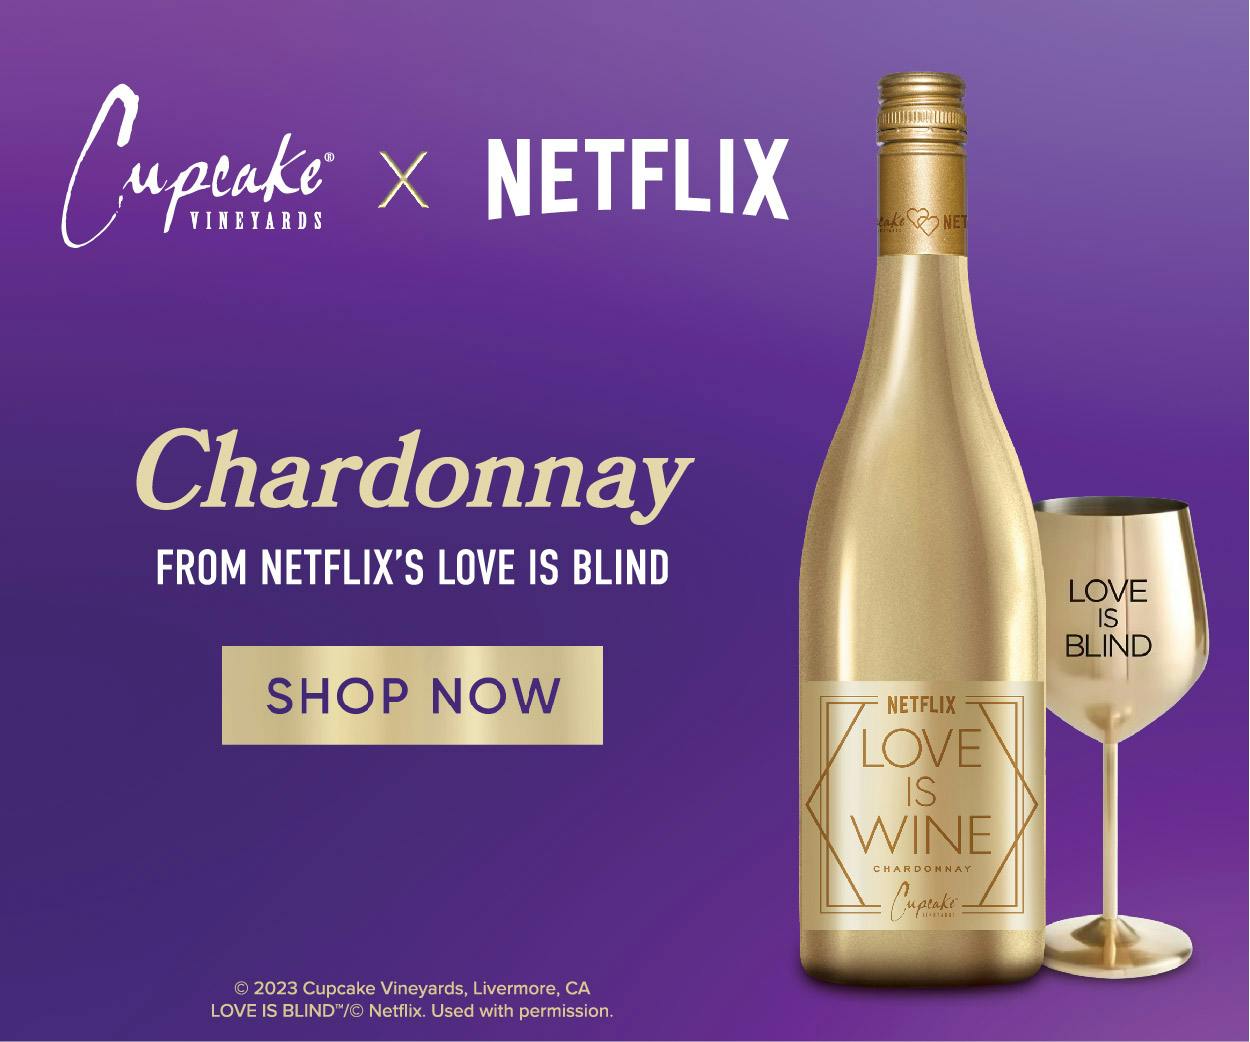 Netflix Love is Wine Chardonnay by Cupcake